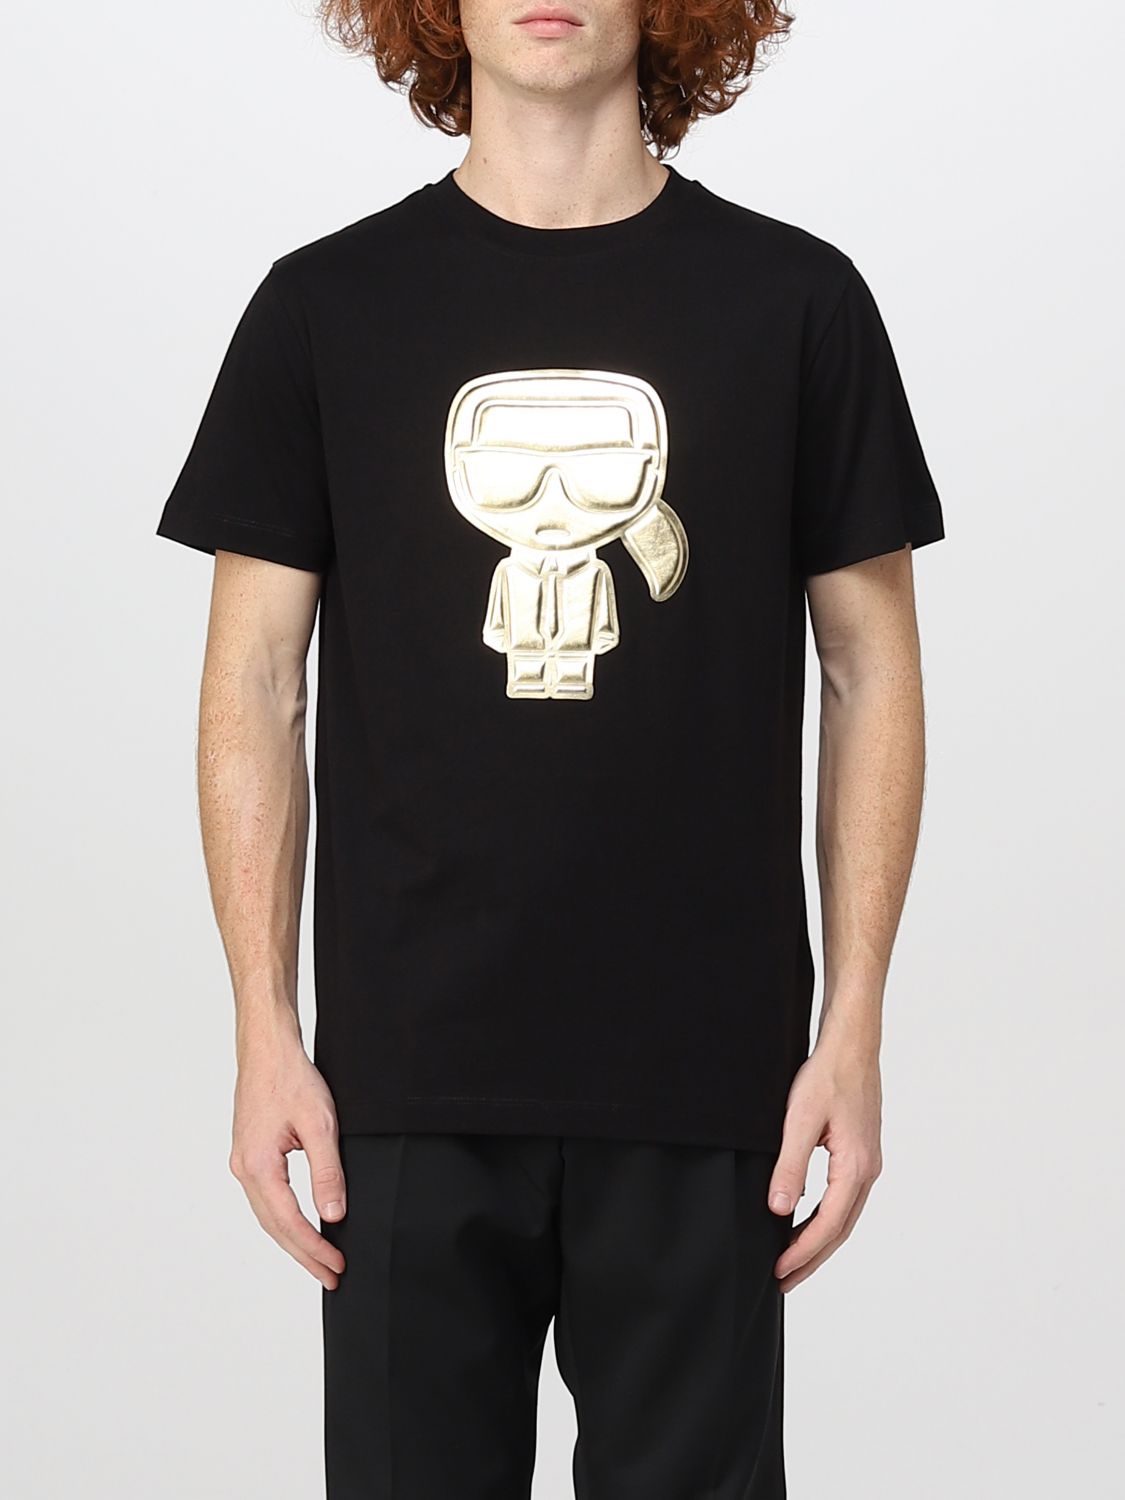 Karl Lagerfeld Outlet: t-shirt for man - Gold | Karl Lagerfeld t-shirt ...